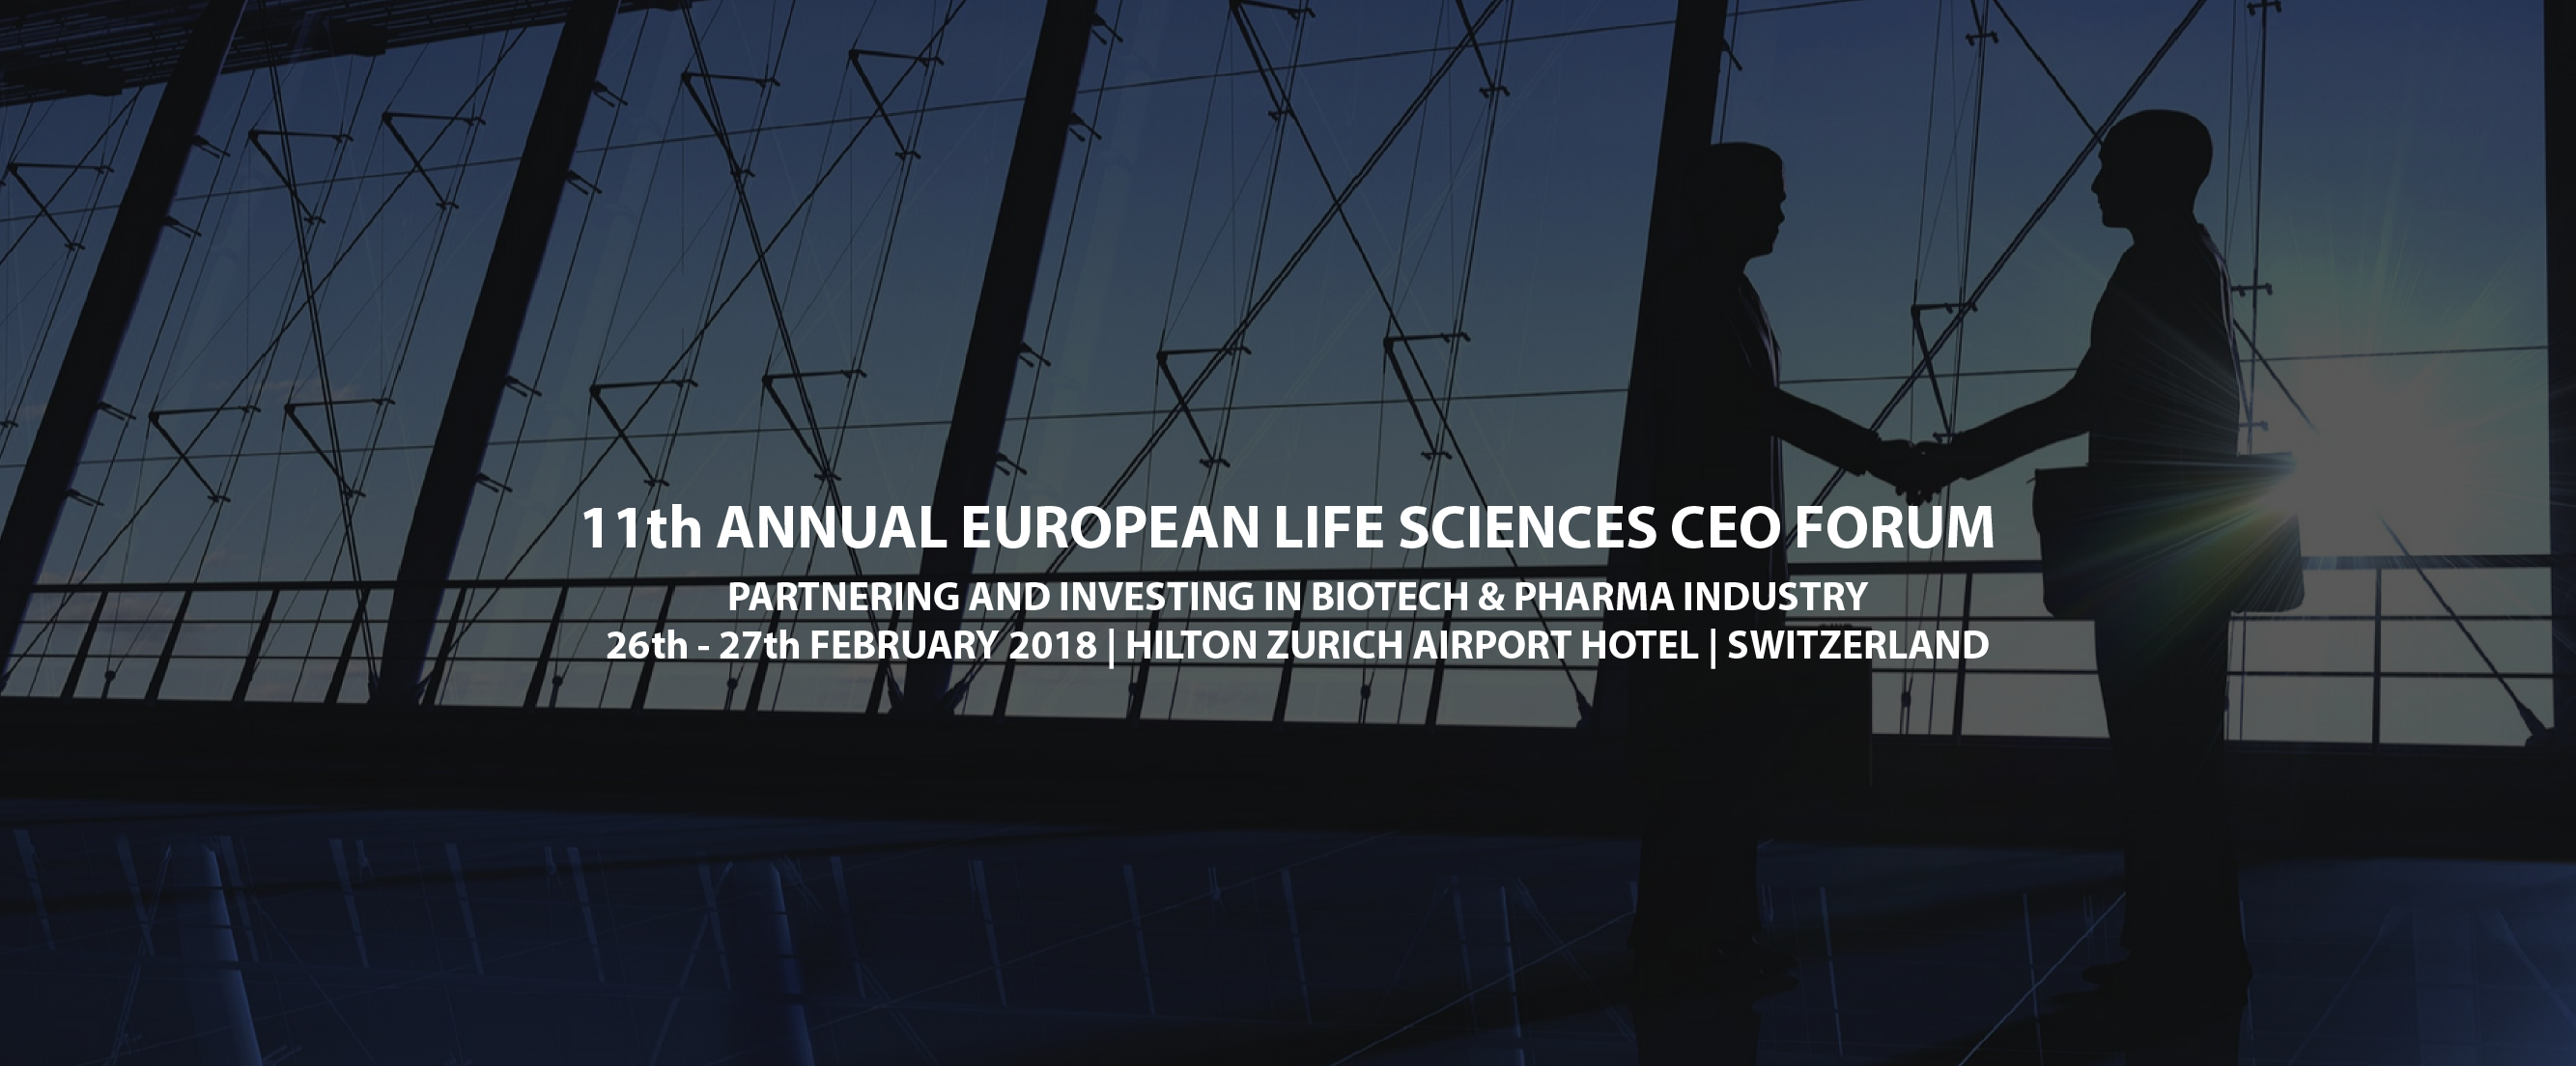 11th Annual European Life Sciences CEO Forum